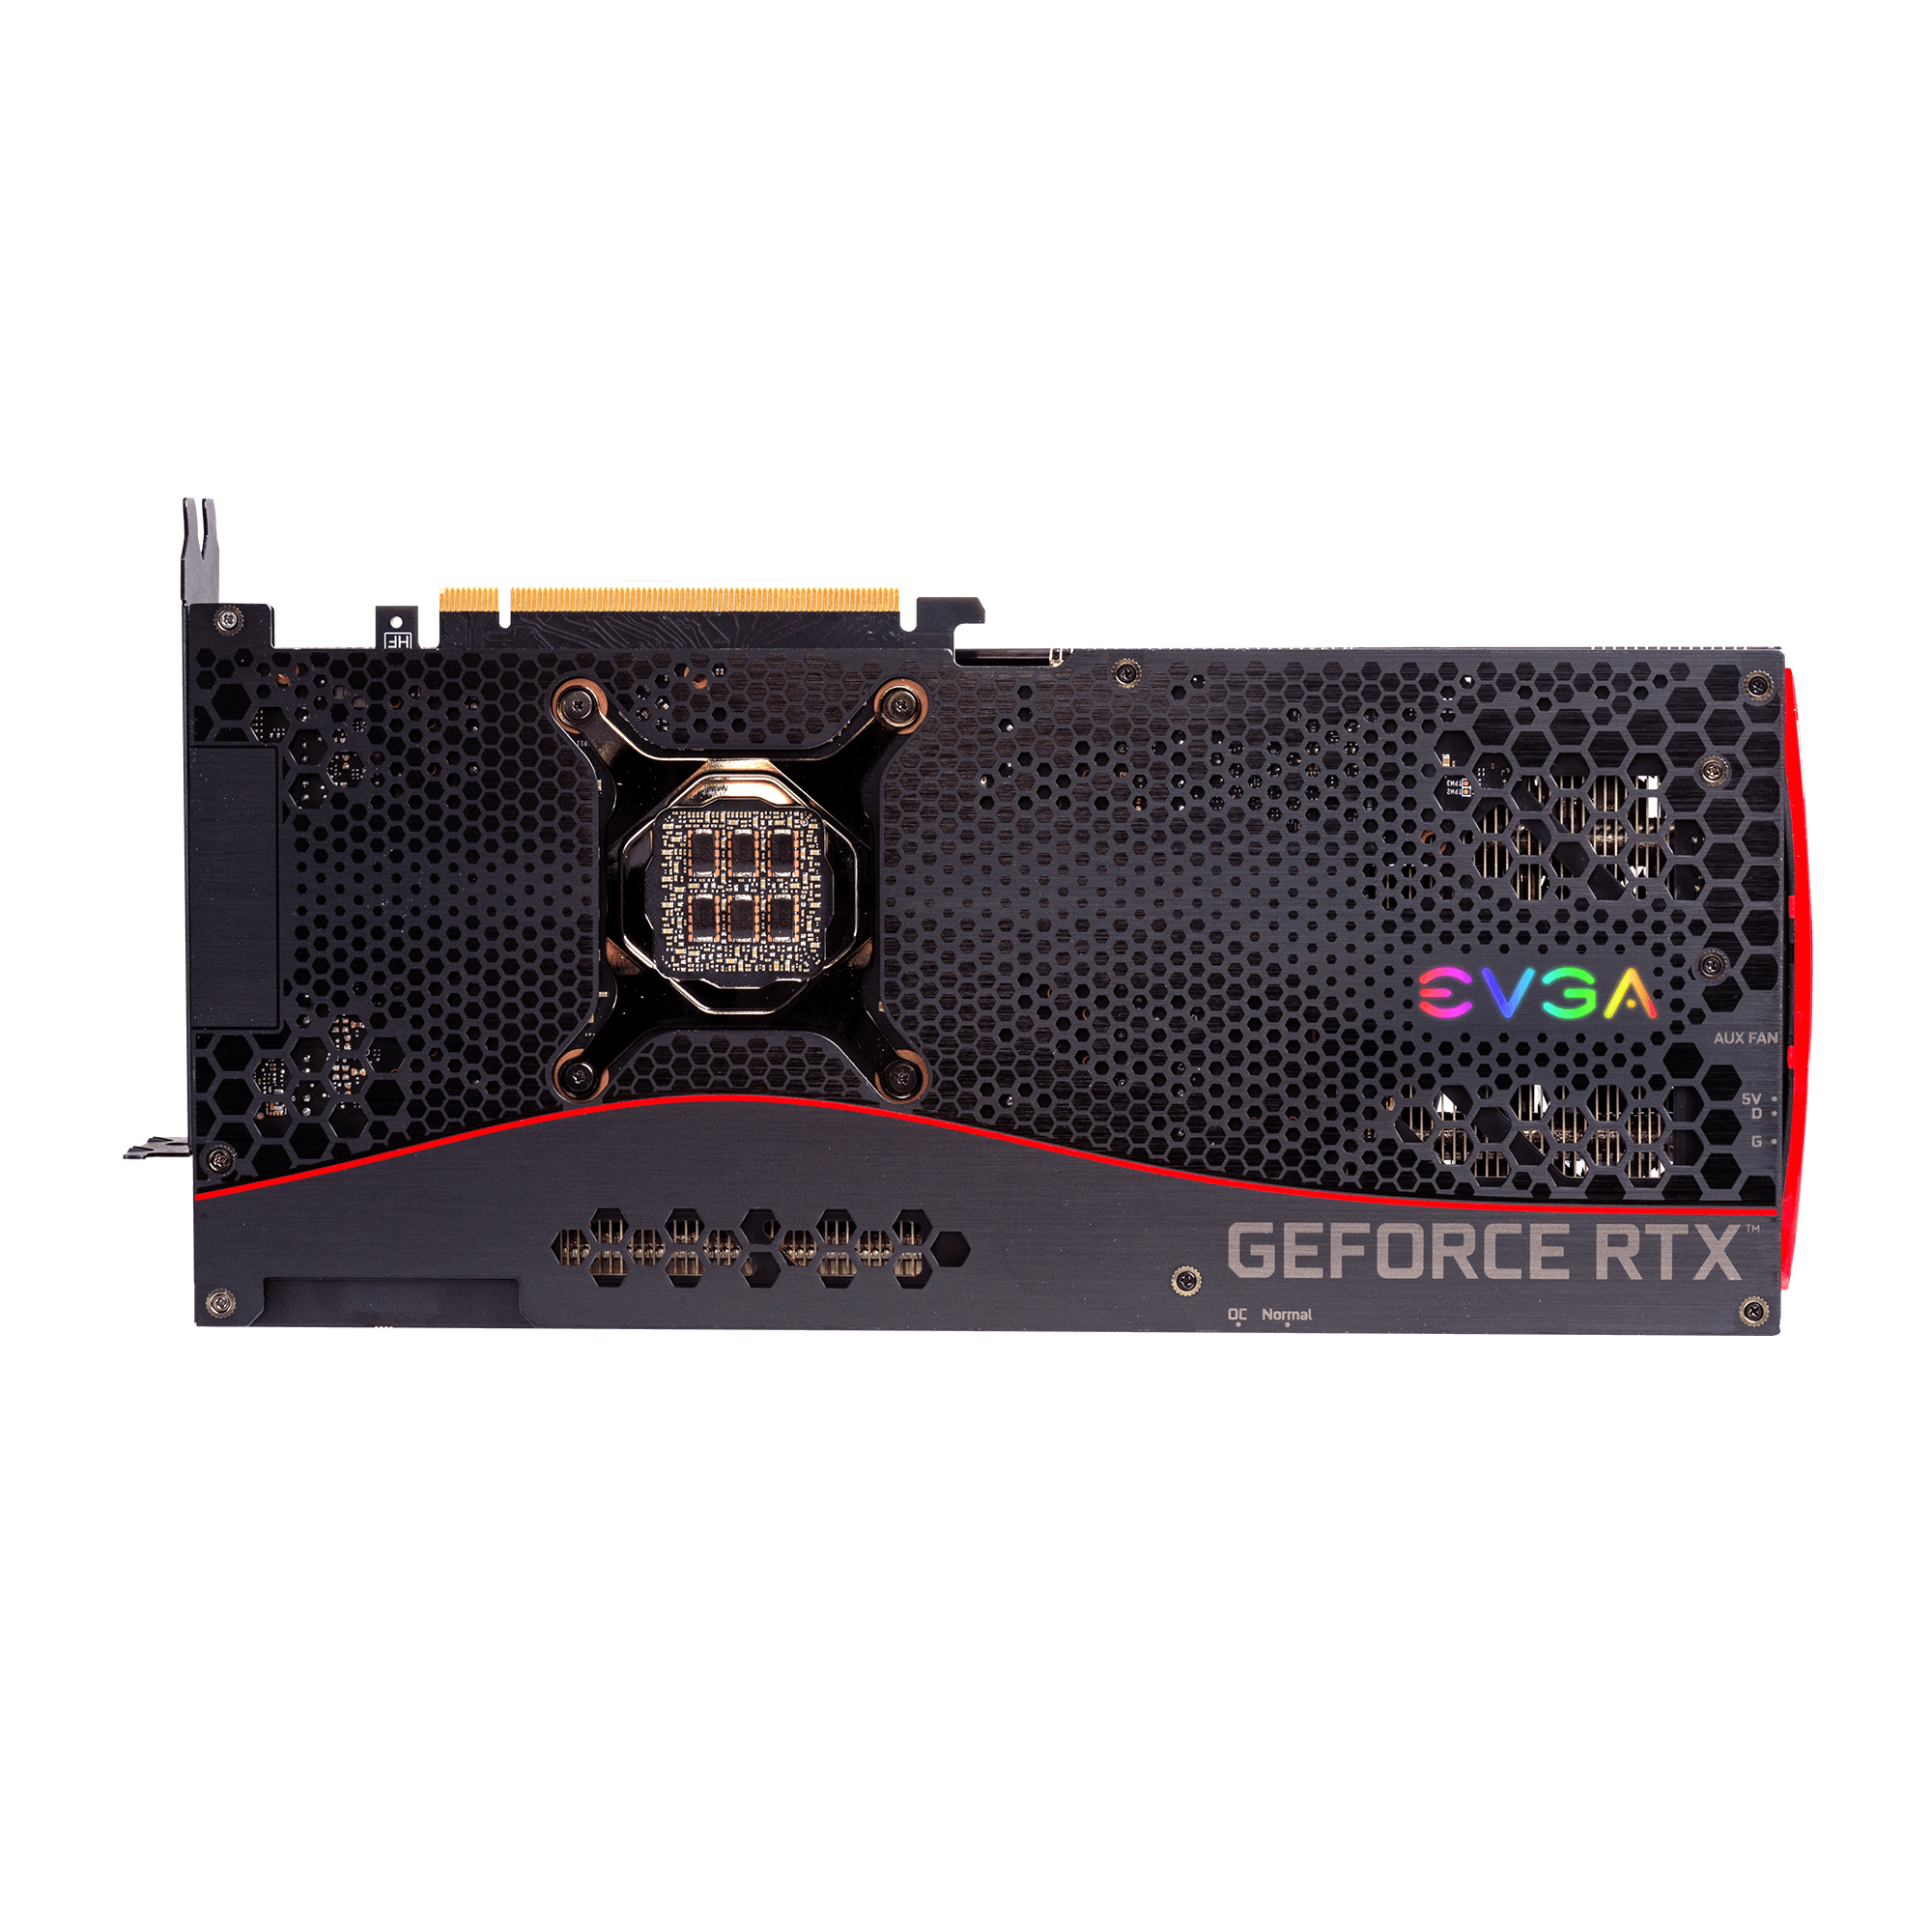 EVGA GeForce RTX 3080 FTW3 ULTRA GAMING + PSU 850W EVGA COMBO BACKORDER